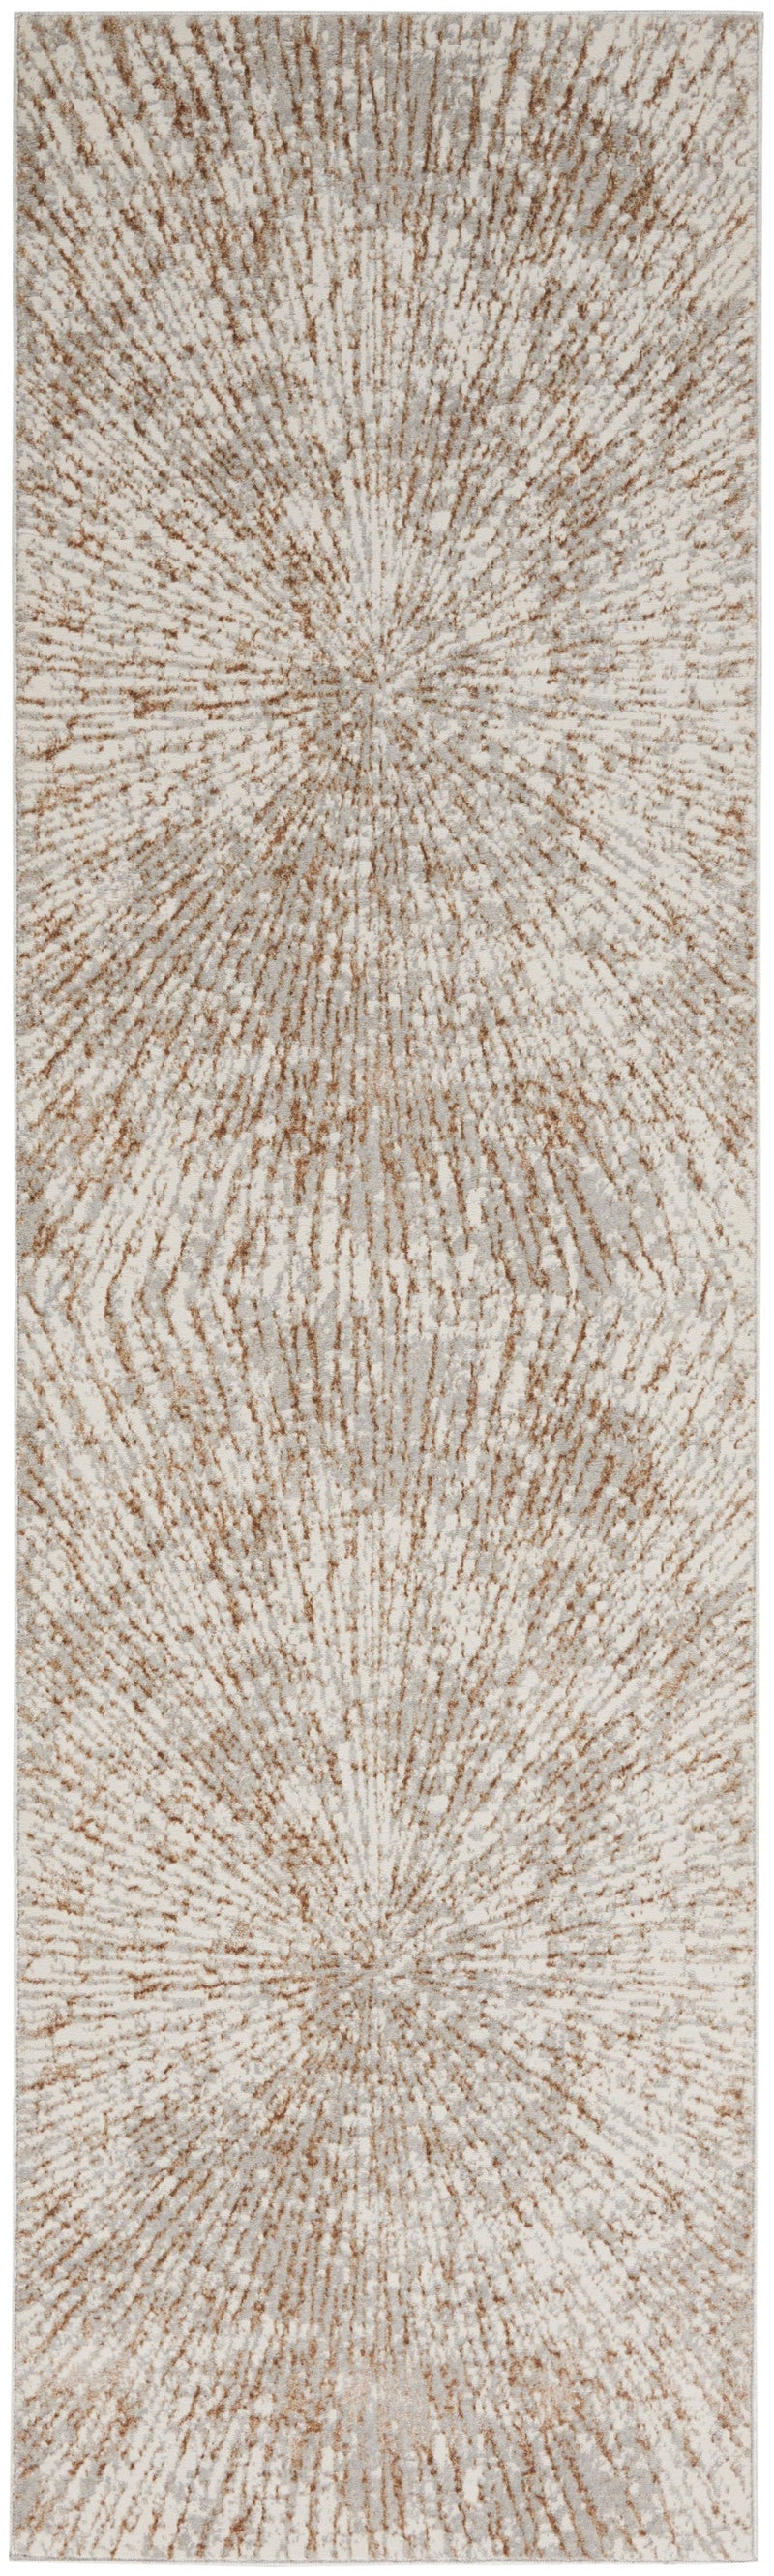 media image for metallic grey mocha rug by nourison 99446852892 redo 2 245